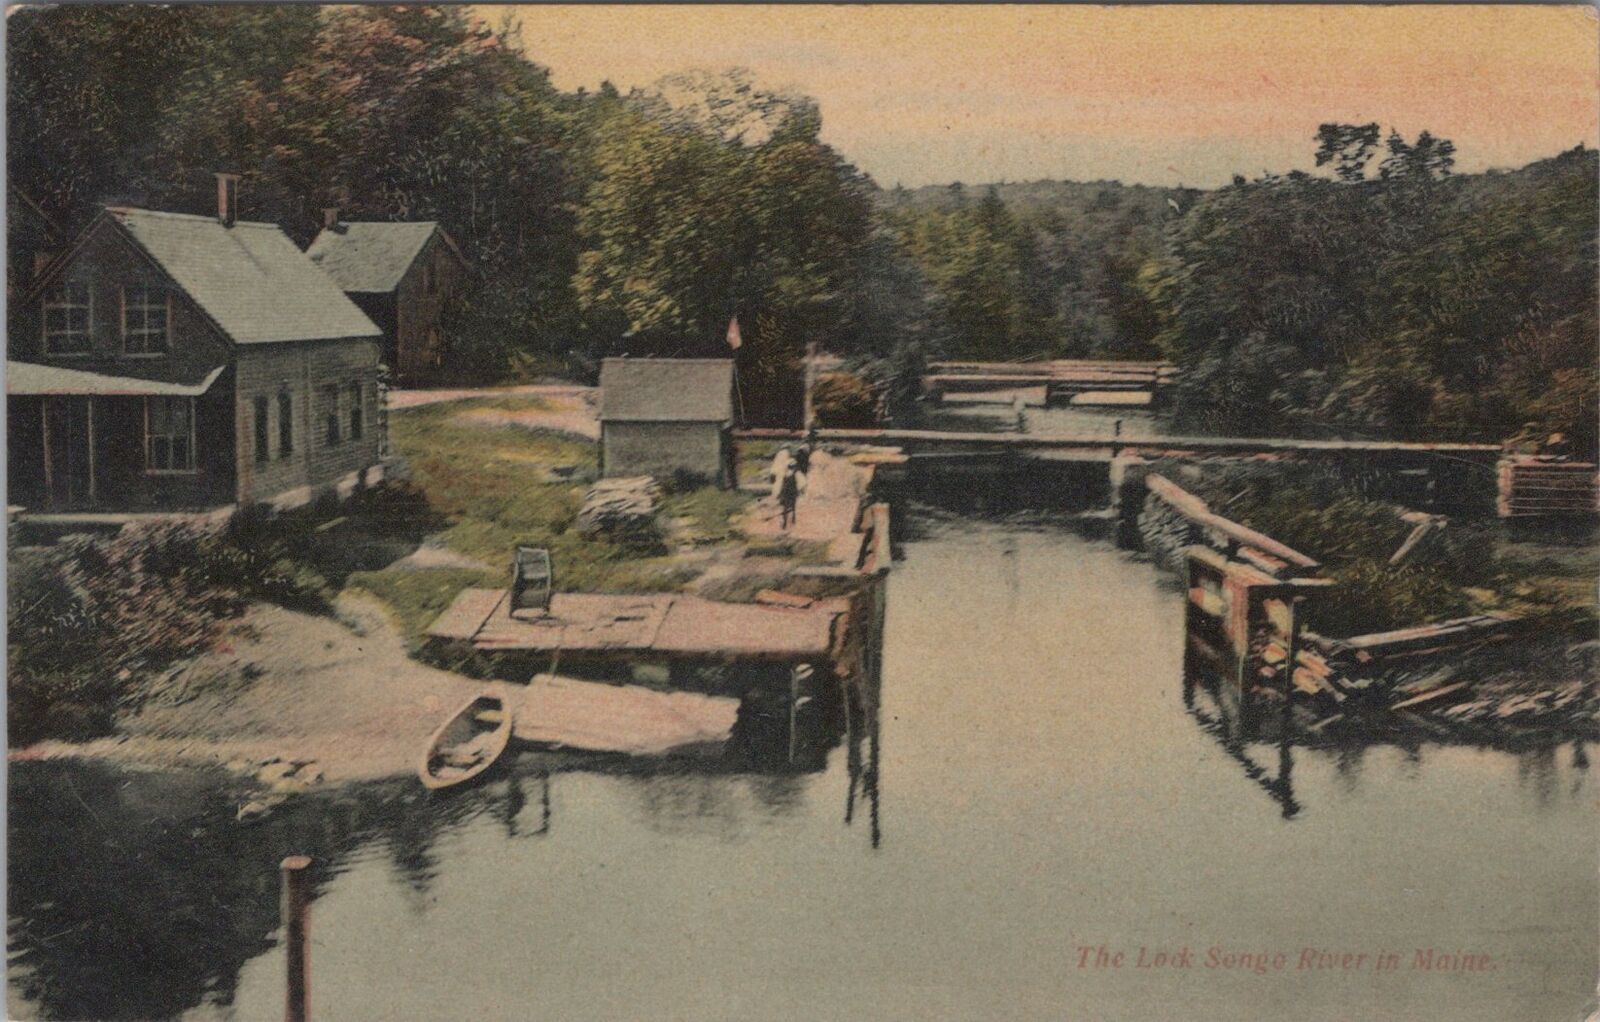 The Lock Songo River in Maine East Sebago Doane Cancel 1909 Postcard